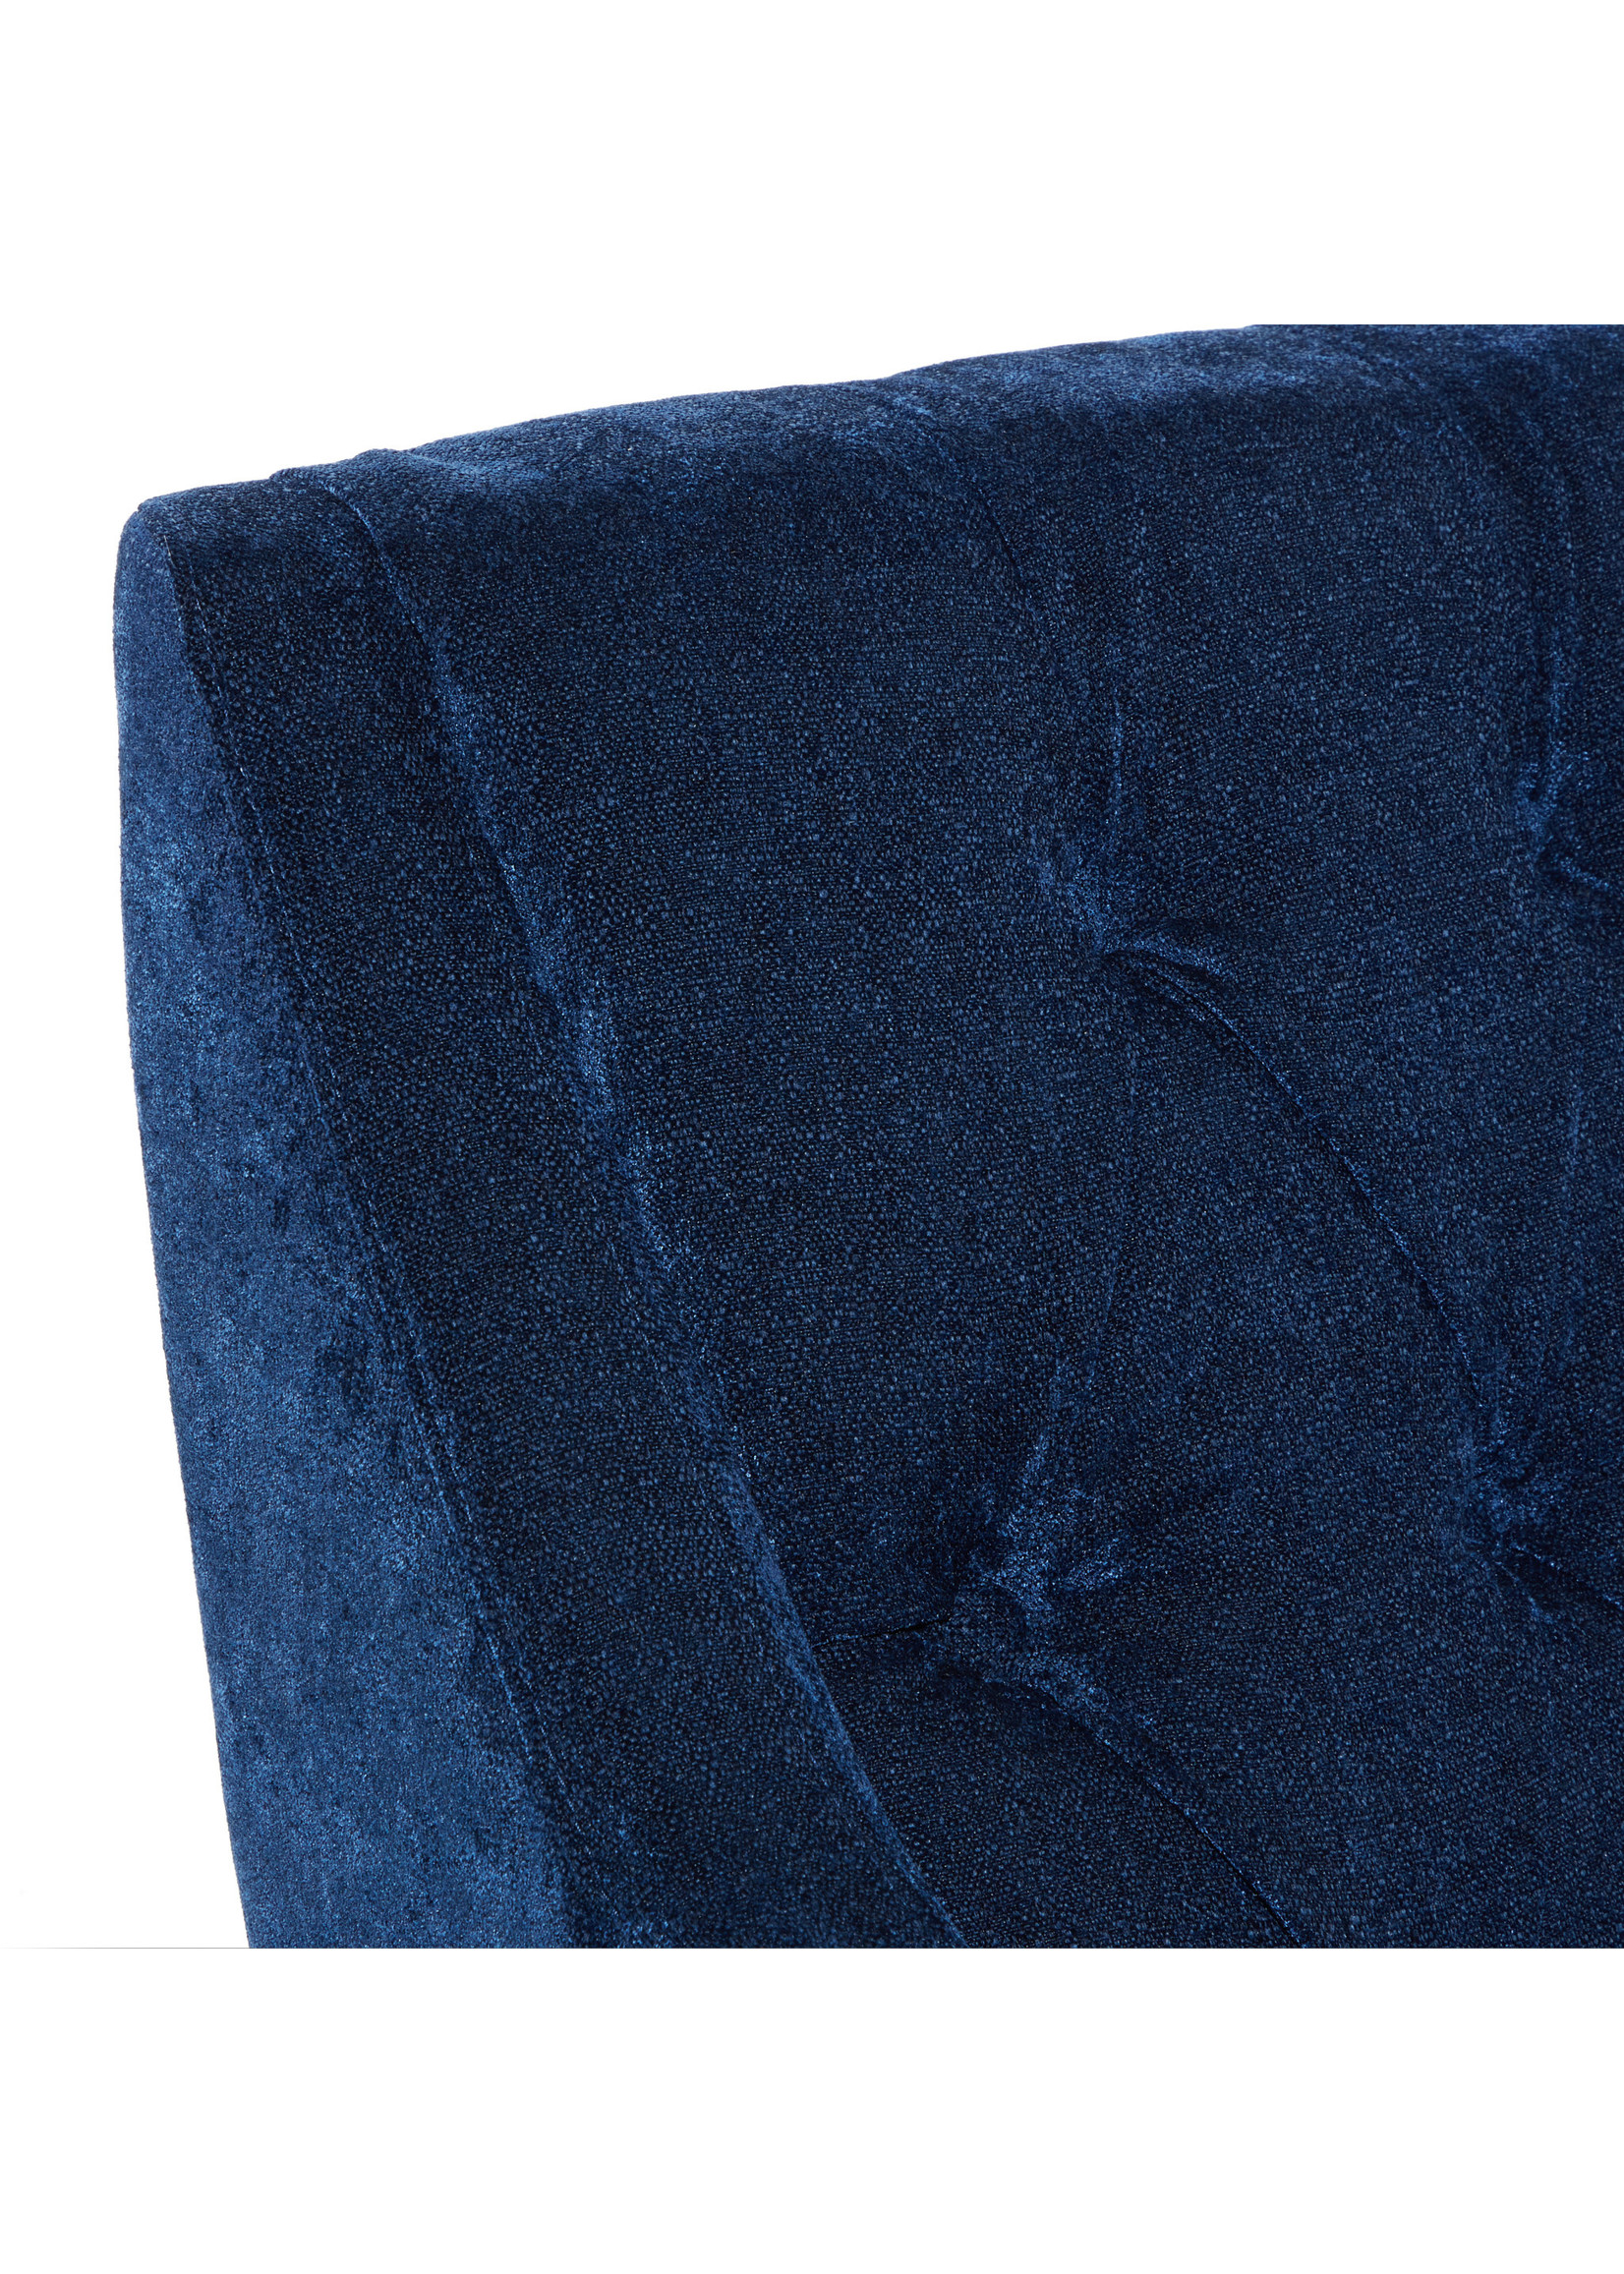 UMA Enterprises Accent Chair - Tufted Fabric Blue